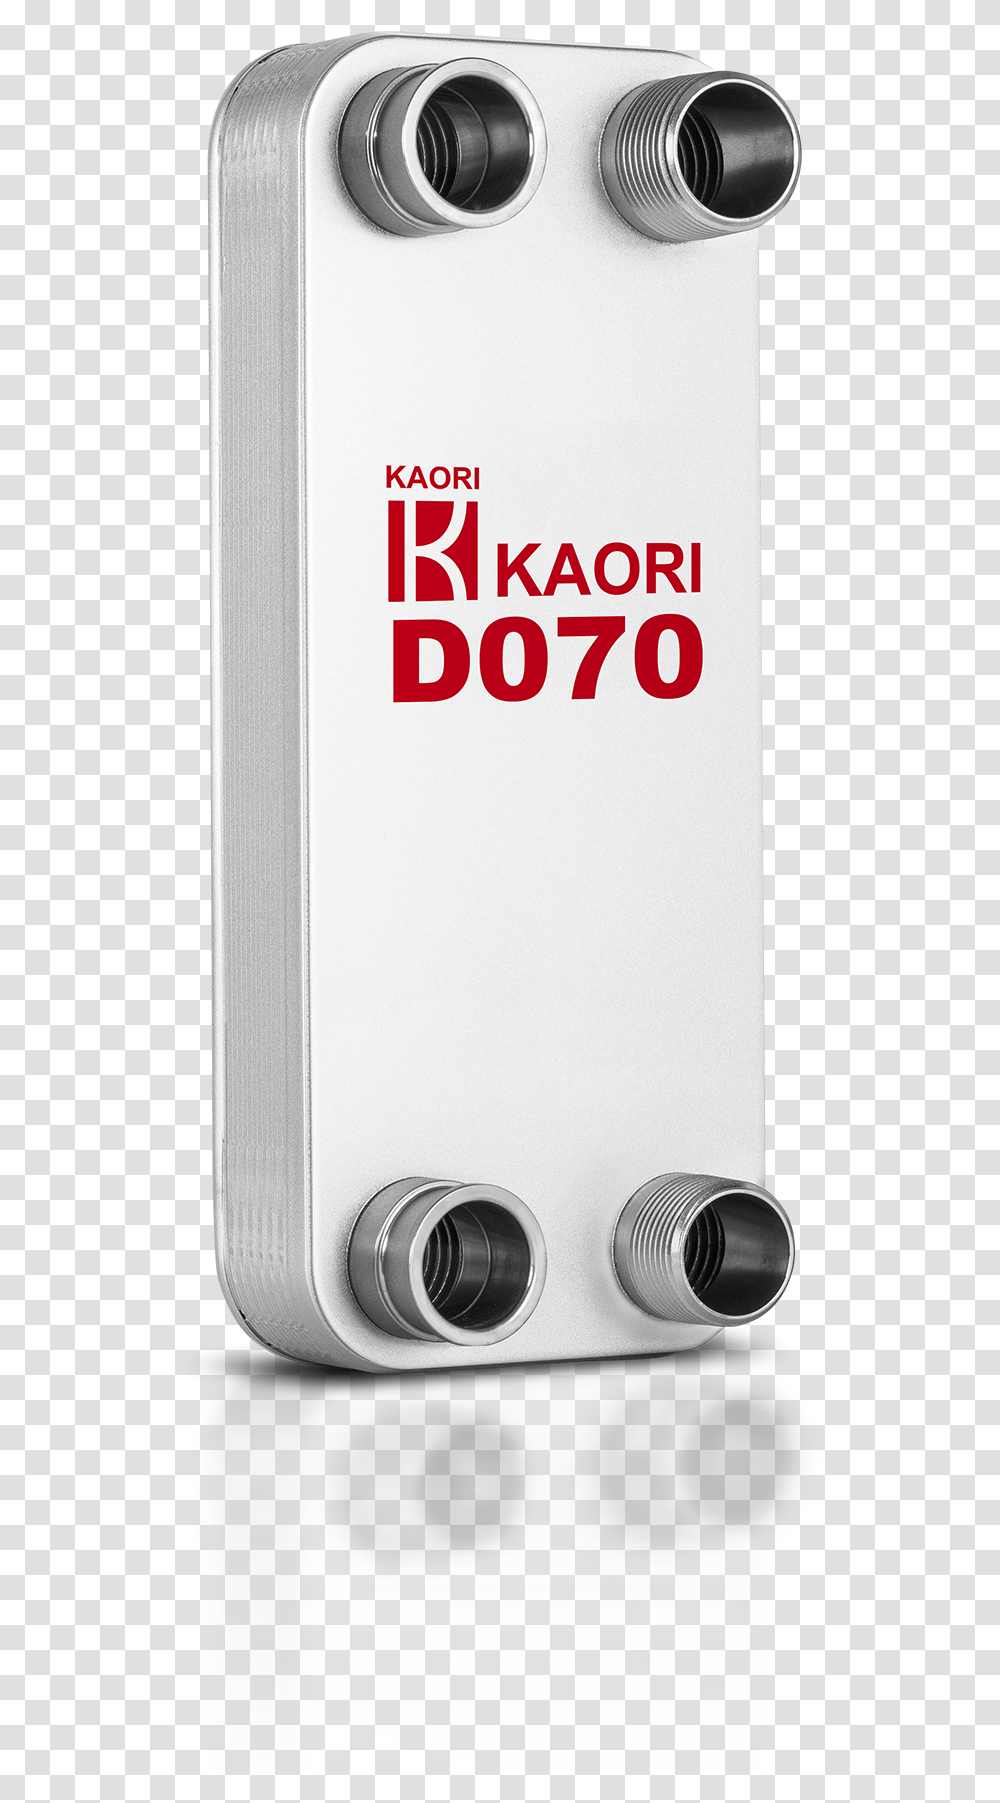 Kaori D070 Double Wall Bphe Kaori Plate Heat Exchanger, Mobile Phone, Electronics, Cell Phone Transparent Png